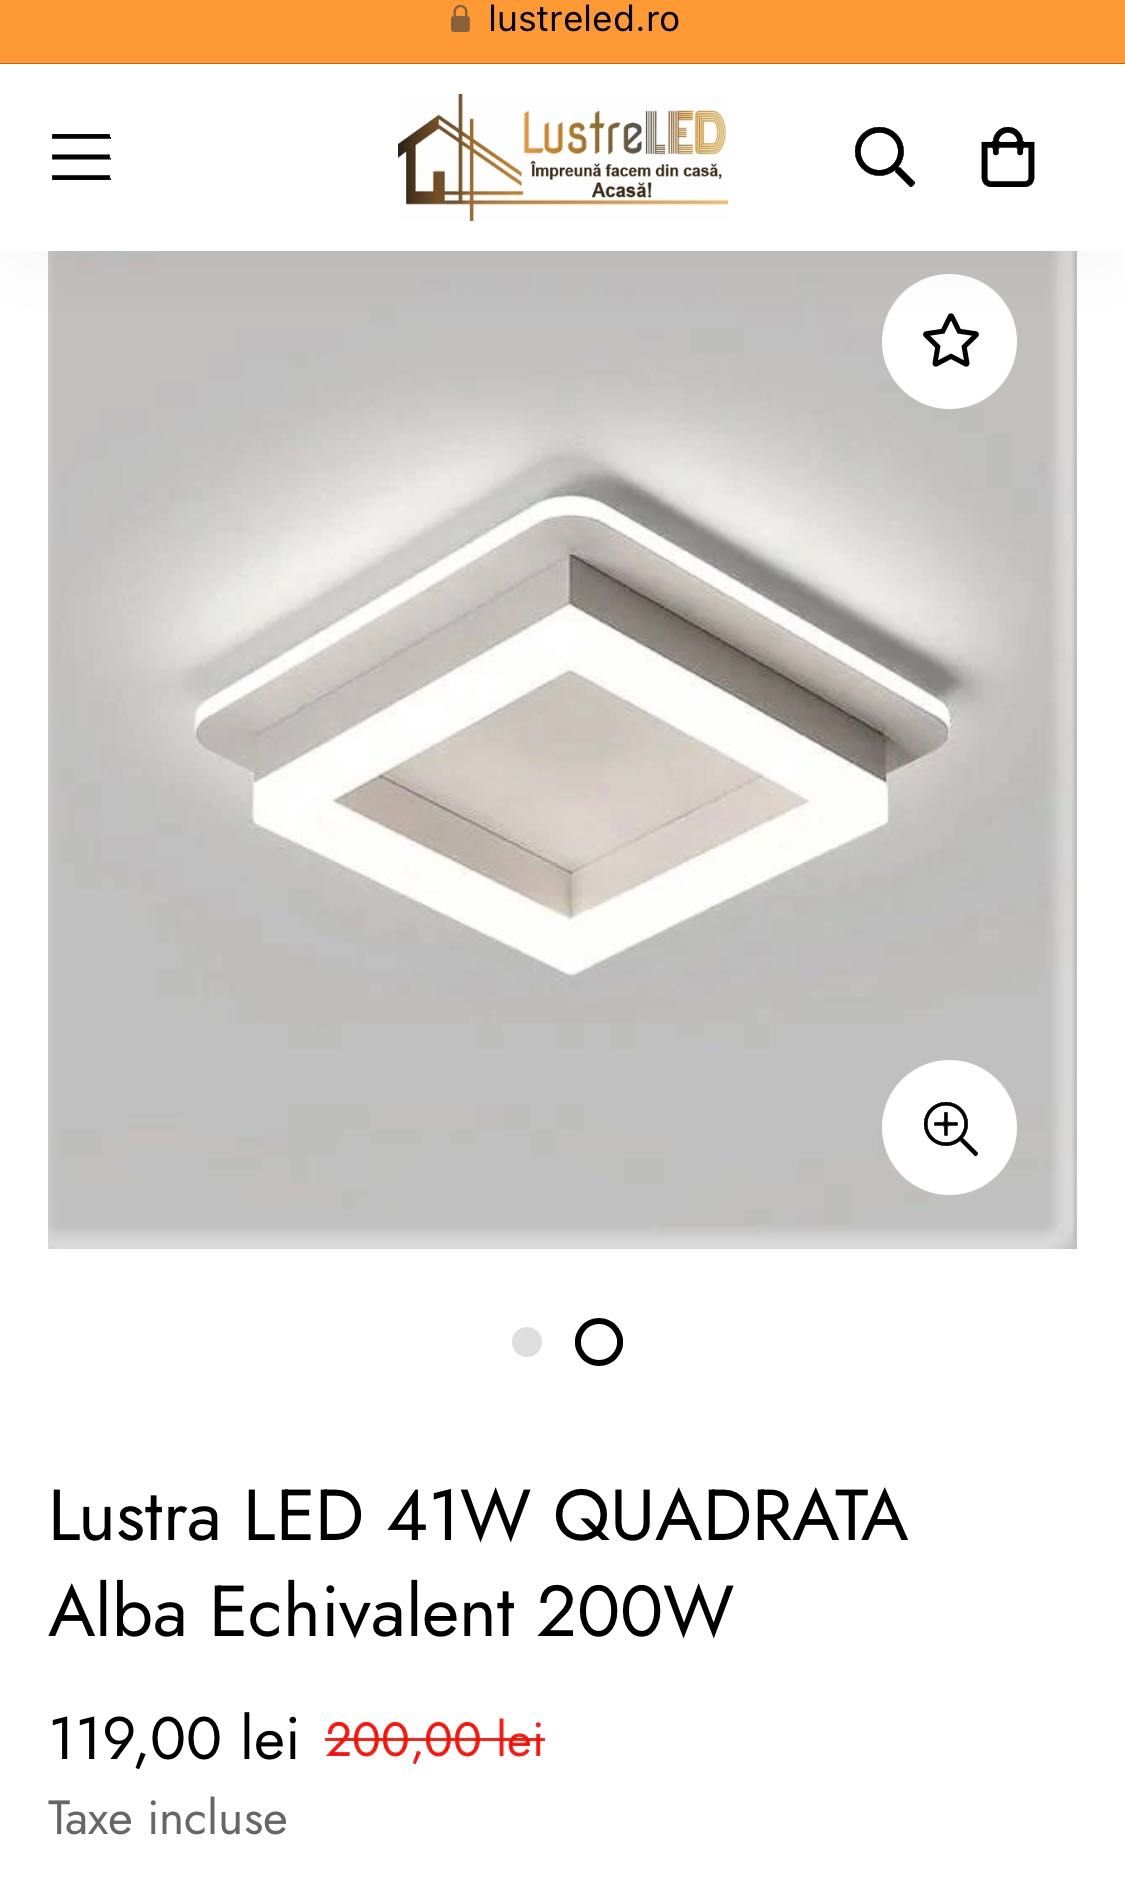 Lustra LED 41W Quadrata alba echivalent 200W pret/ buc (3 bucati)